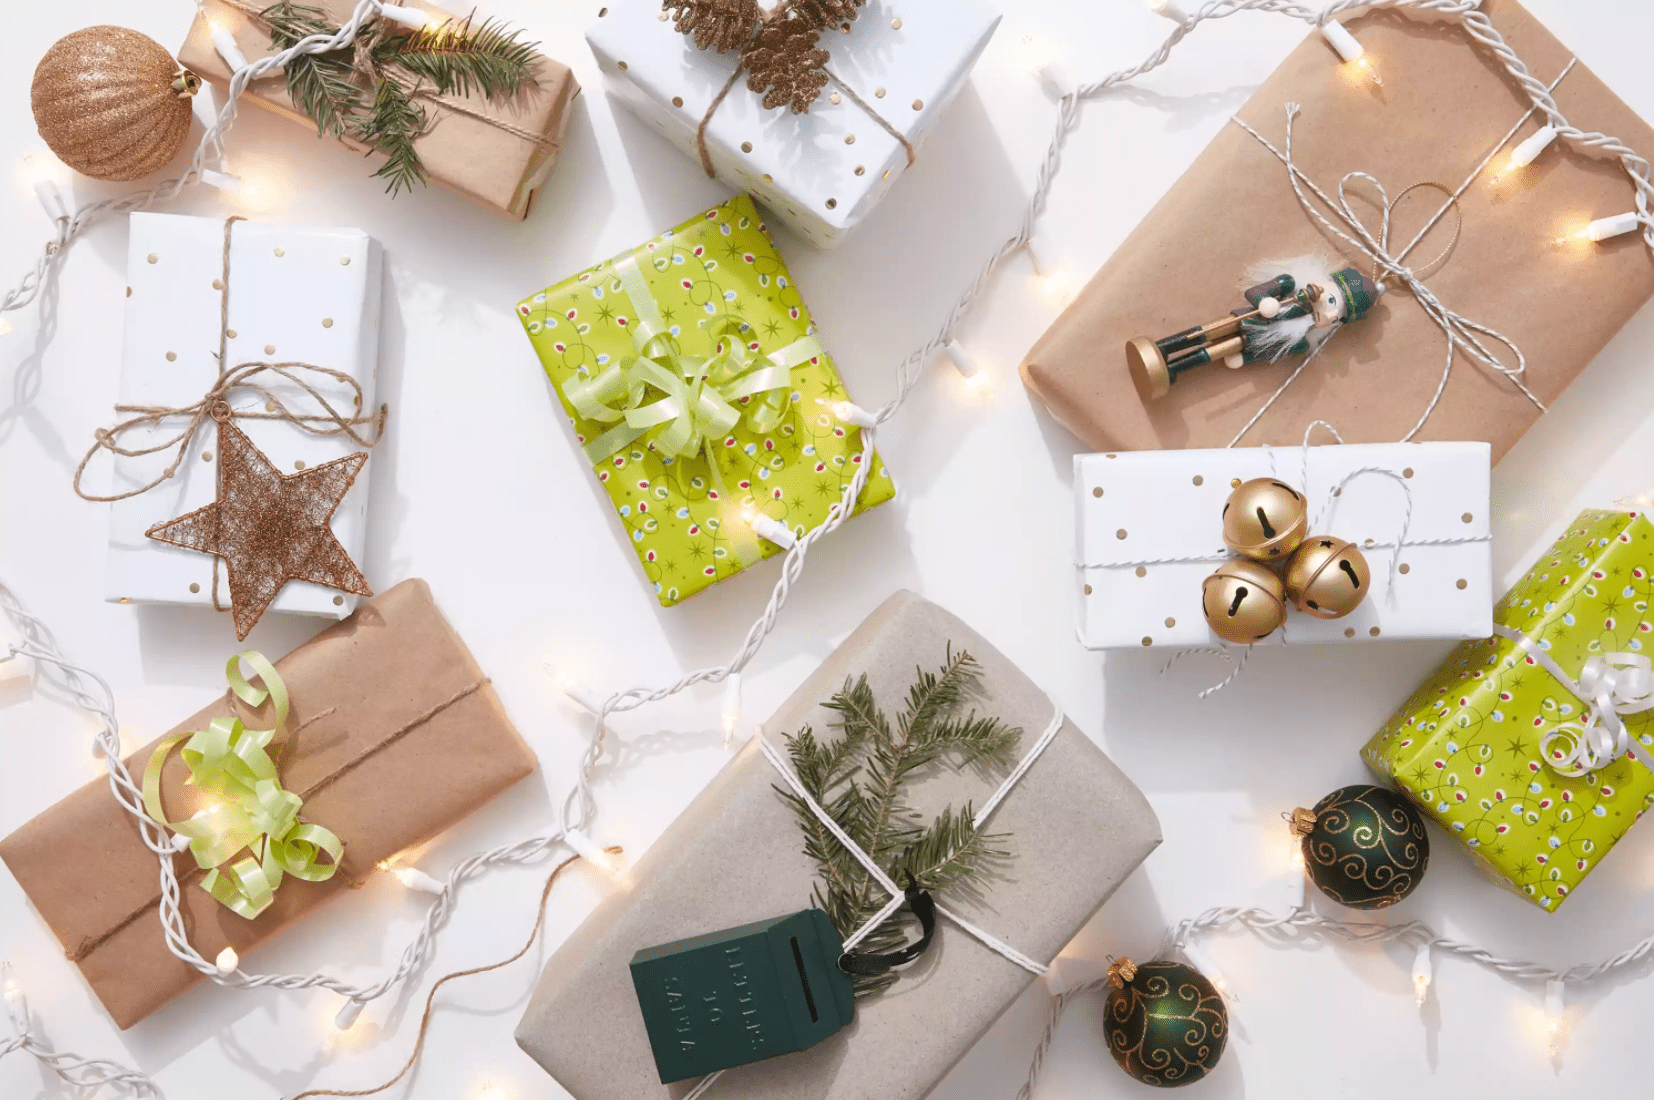 20 Thoughtful Yet Inexpensive Christmas Gift Ideas